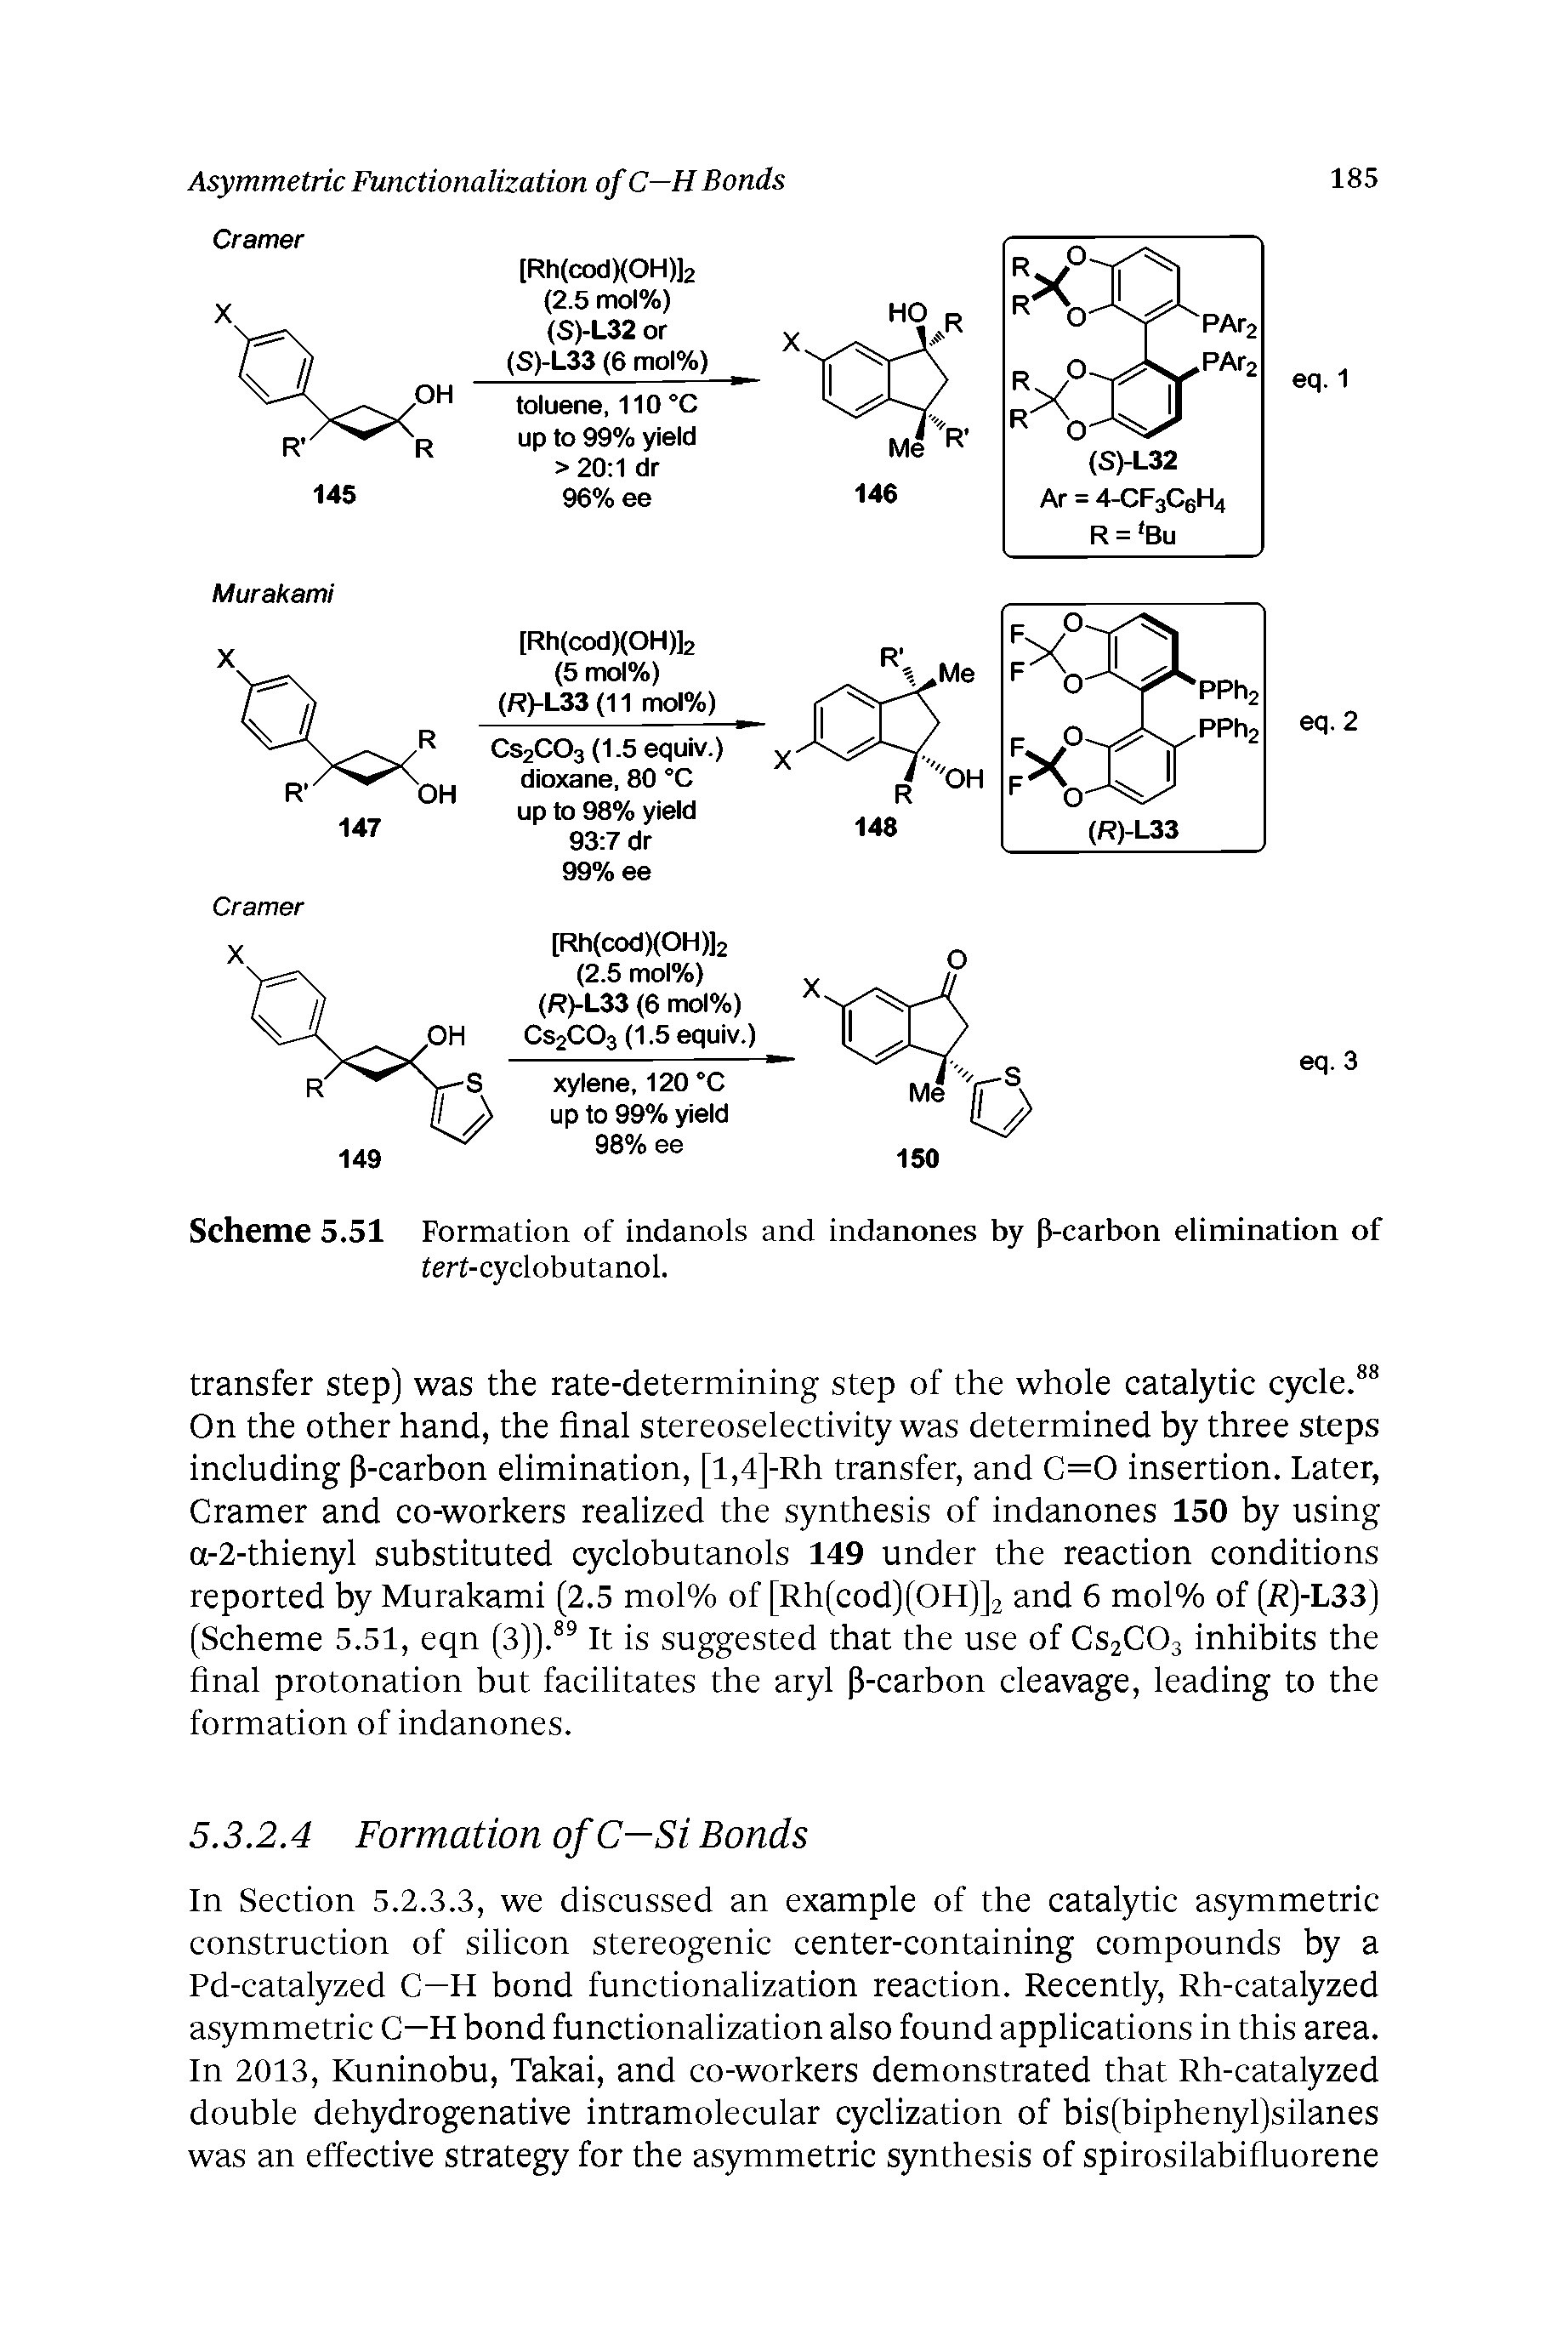 Scheme 5.51 Formation of indanols and indanones by p-carbon elimination of tert-cyclobutanol.